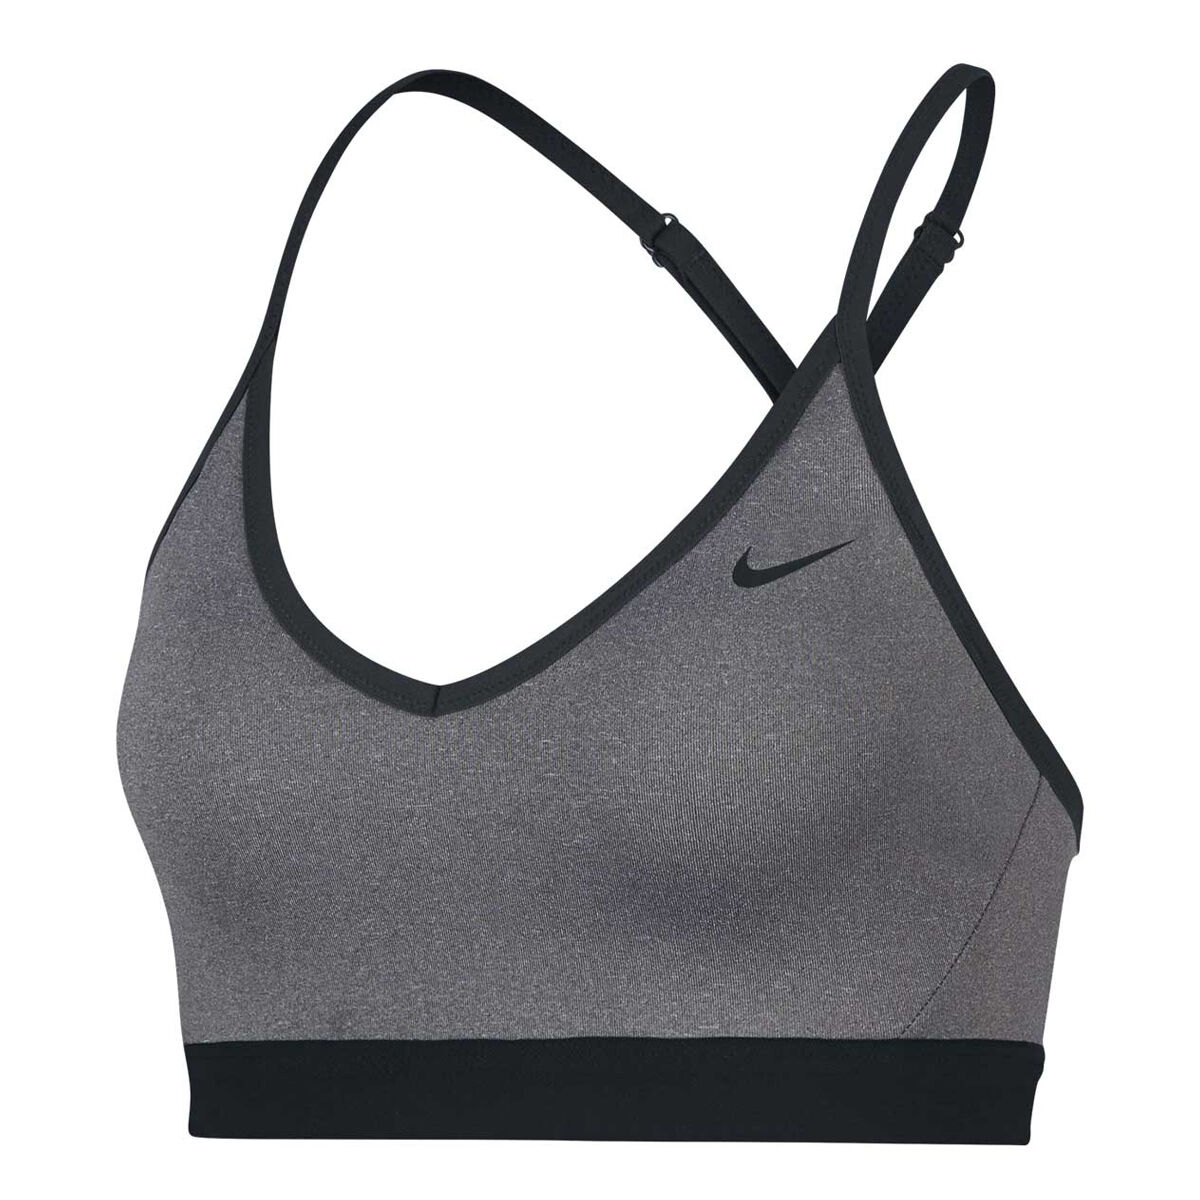 where to buy nike sports bras